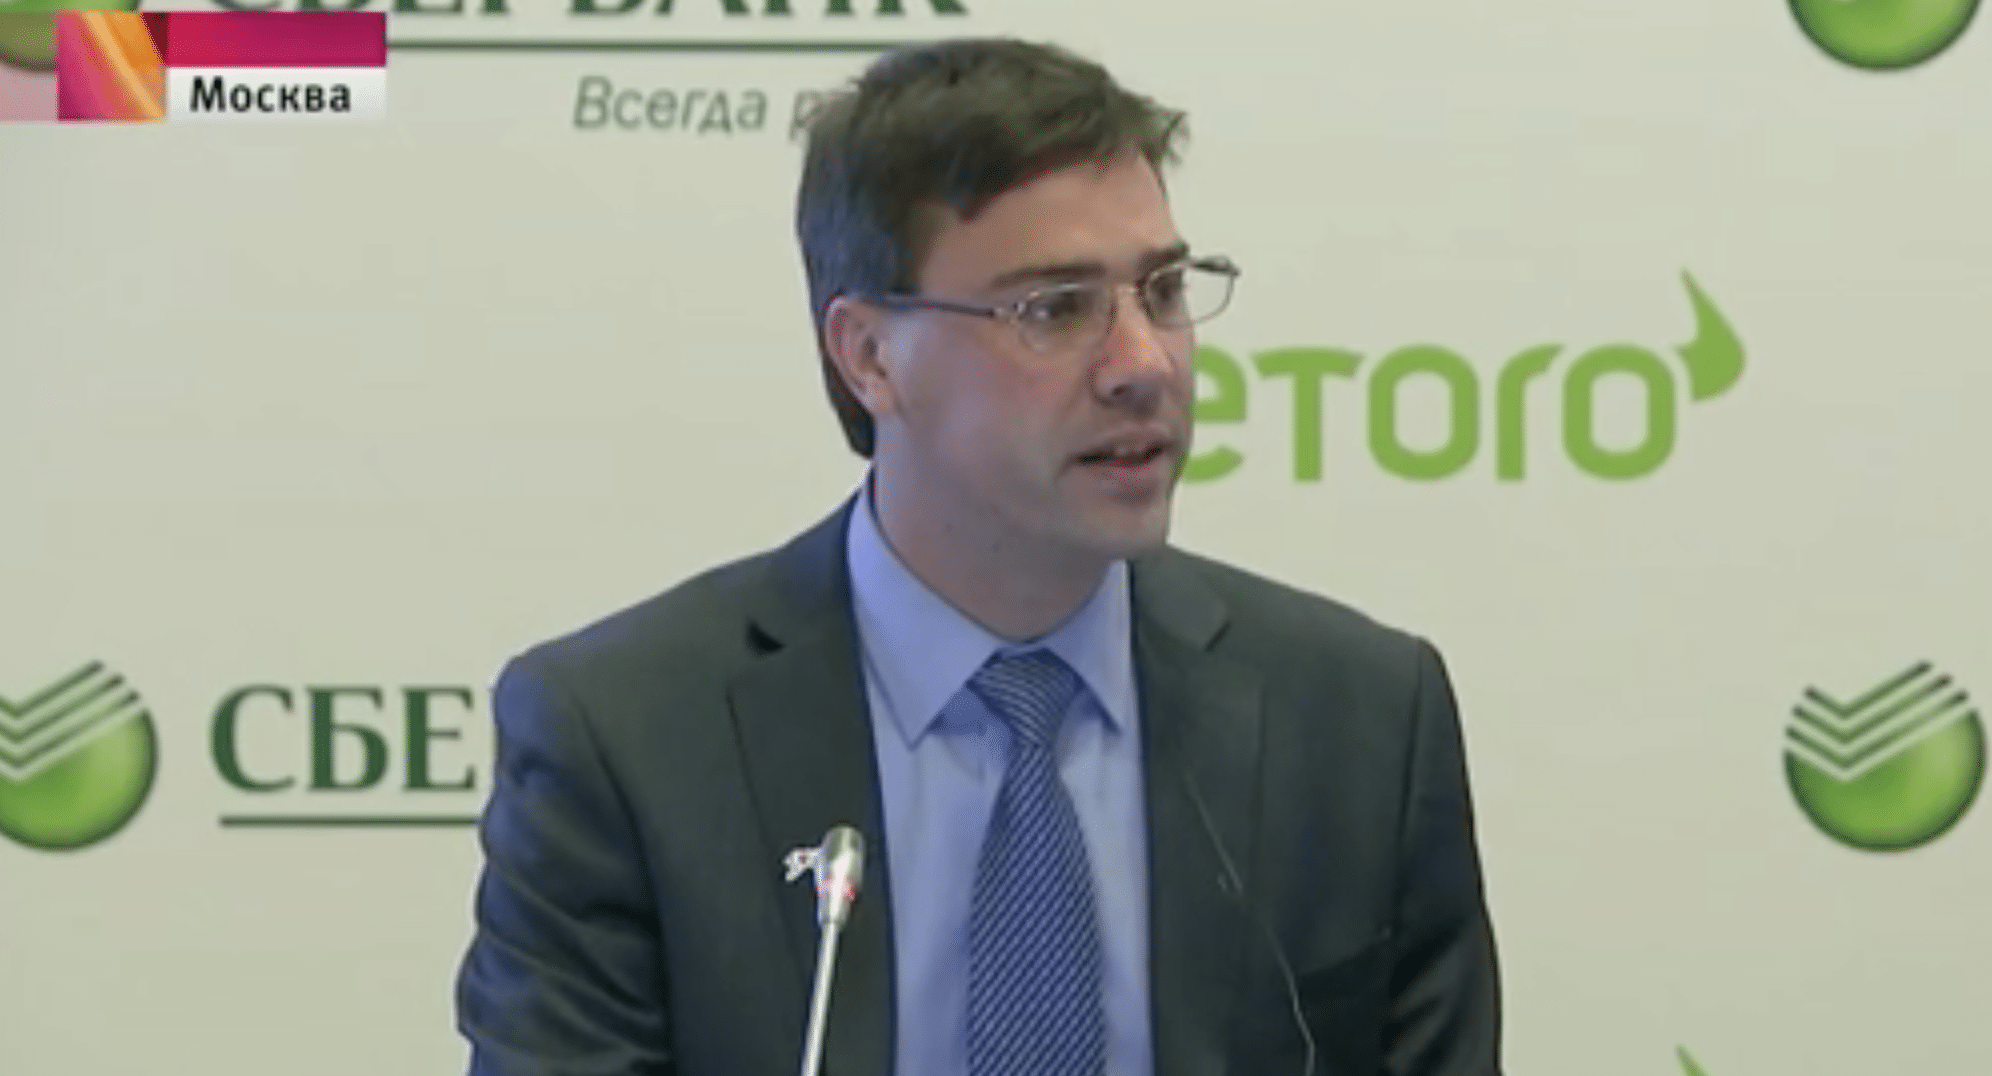 Exclusive: eToro Strikes Partnership Deal With Russian Sberbank